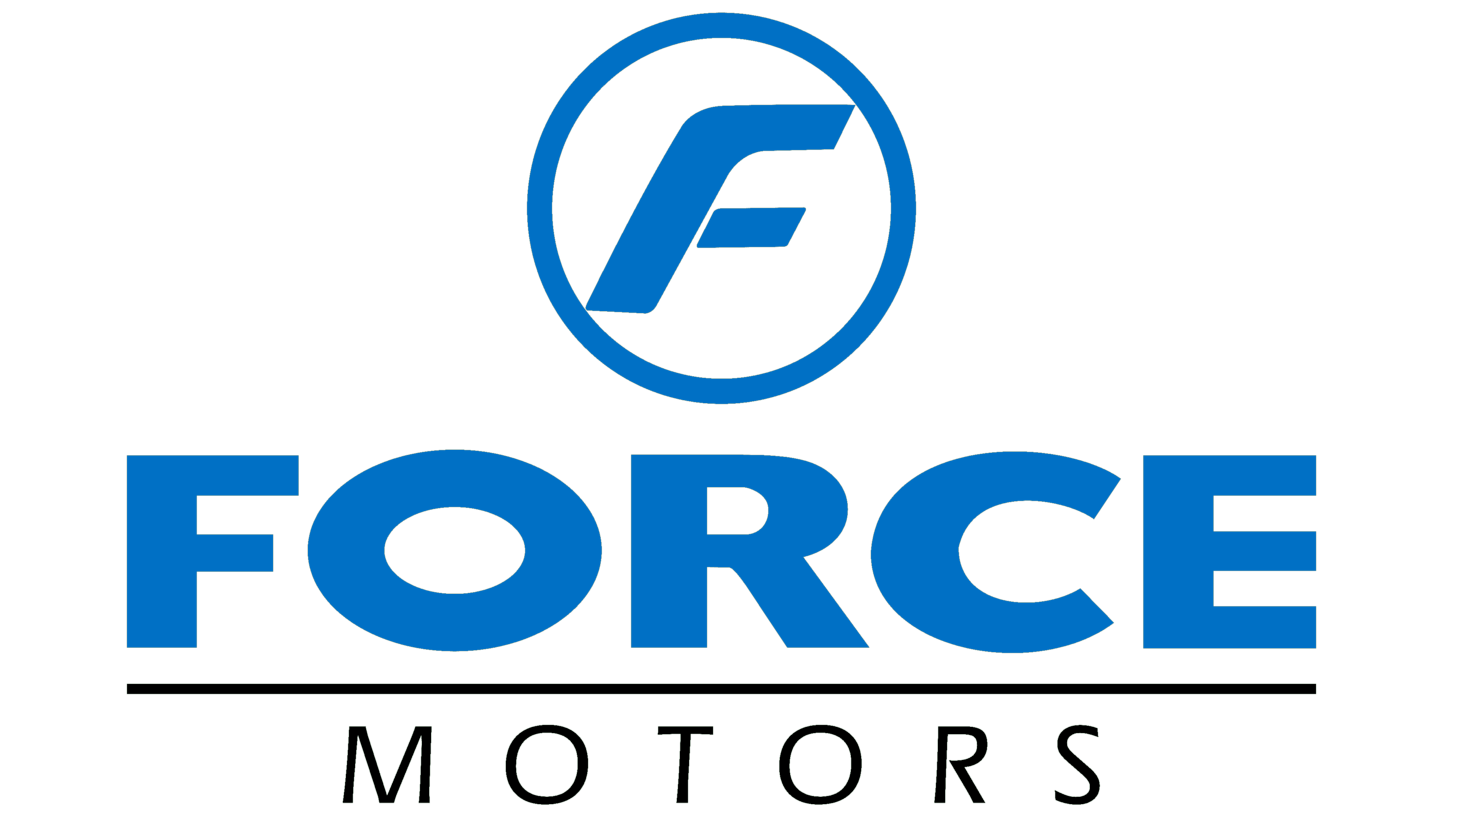 Force motors sign